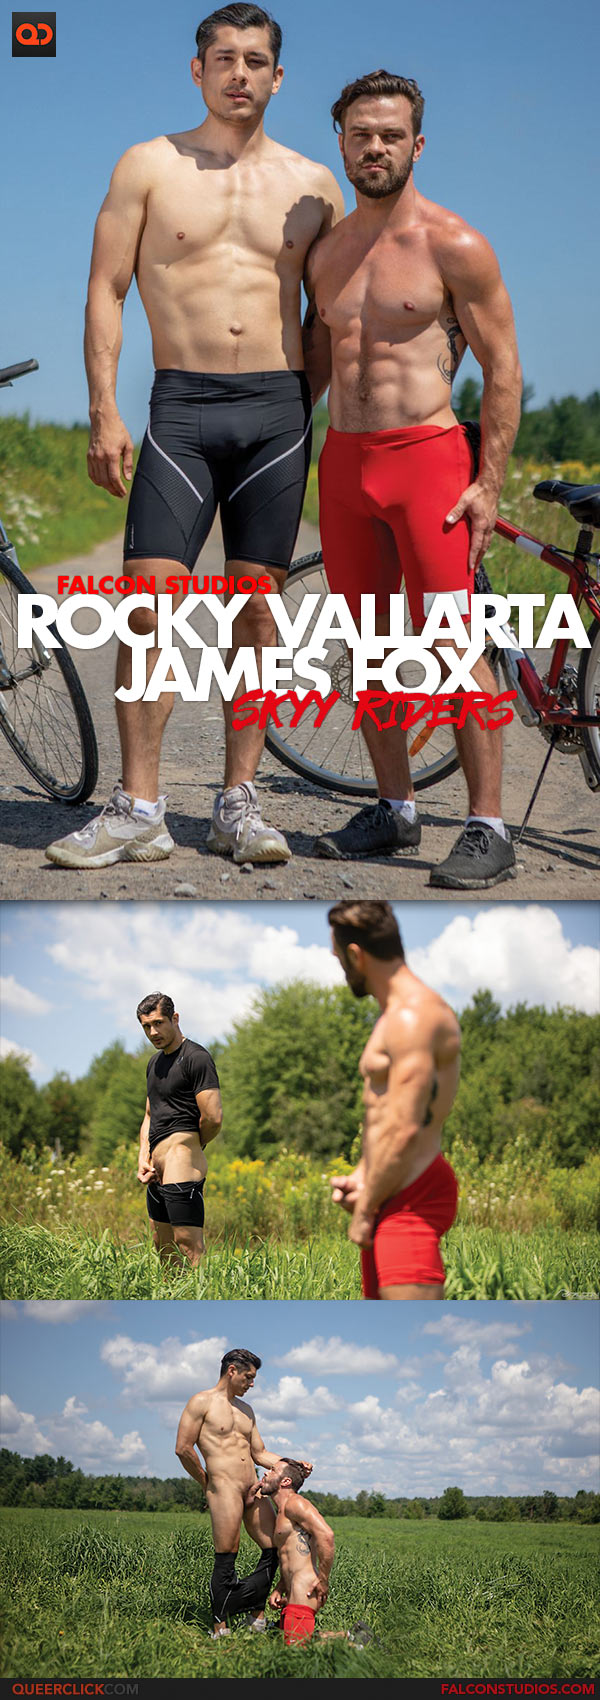 Falcon Studios: Rocky Vallarta Fucks James Fox - Bareback